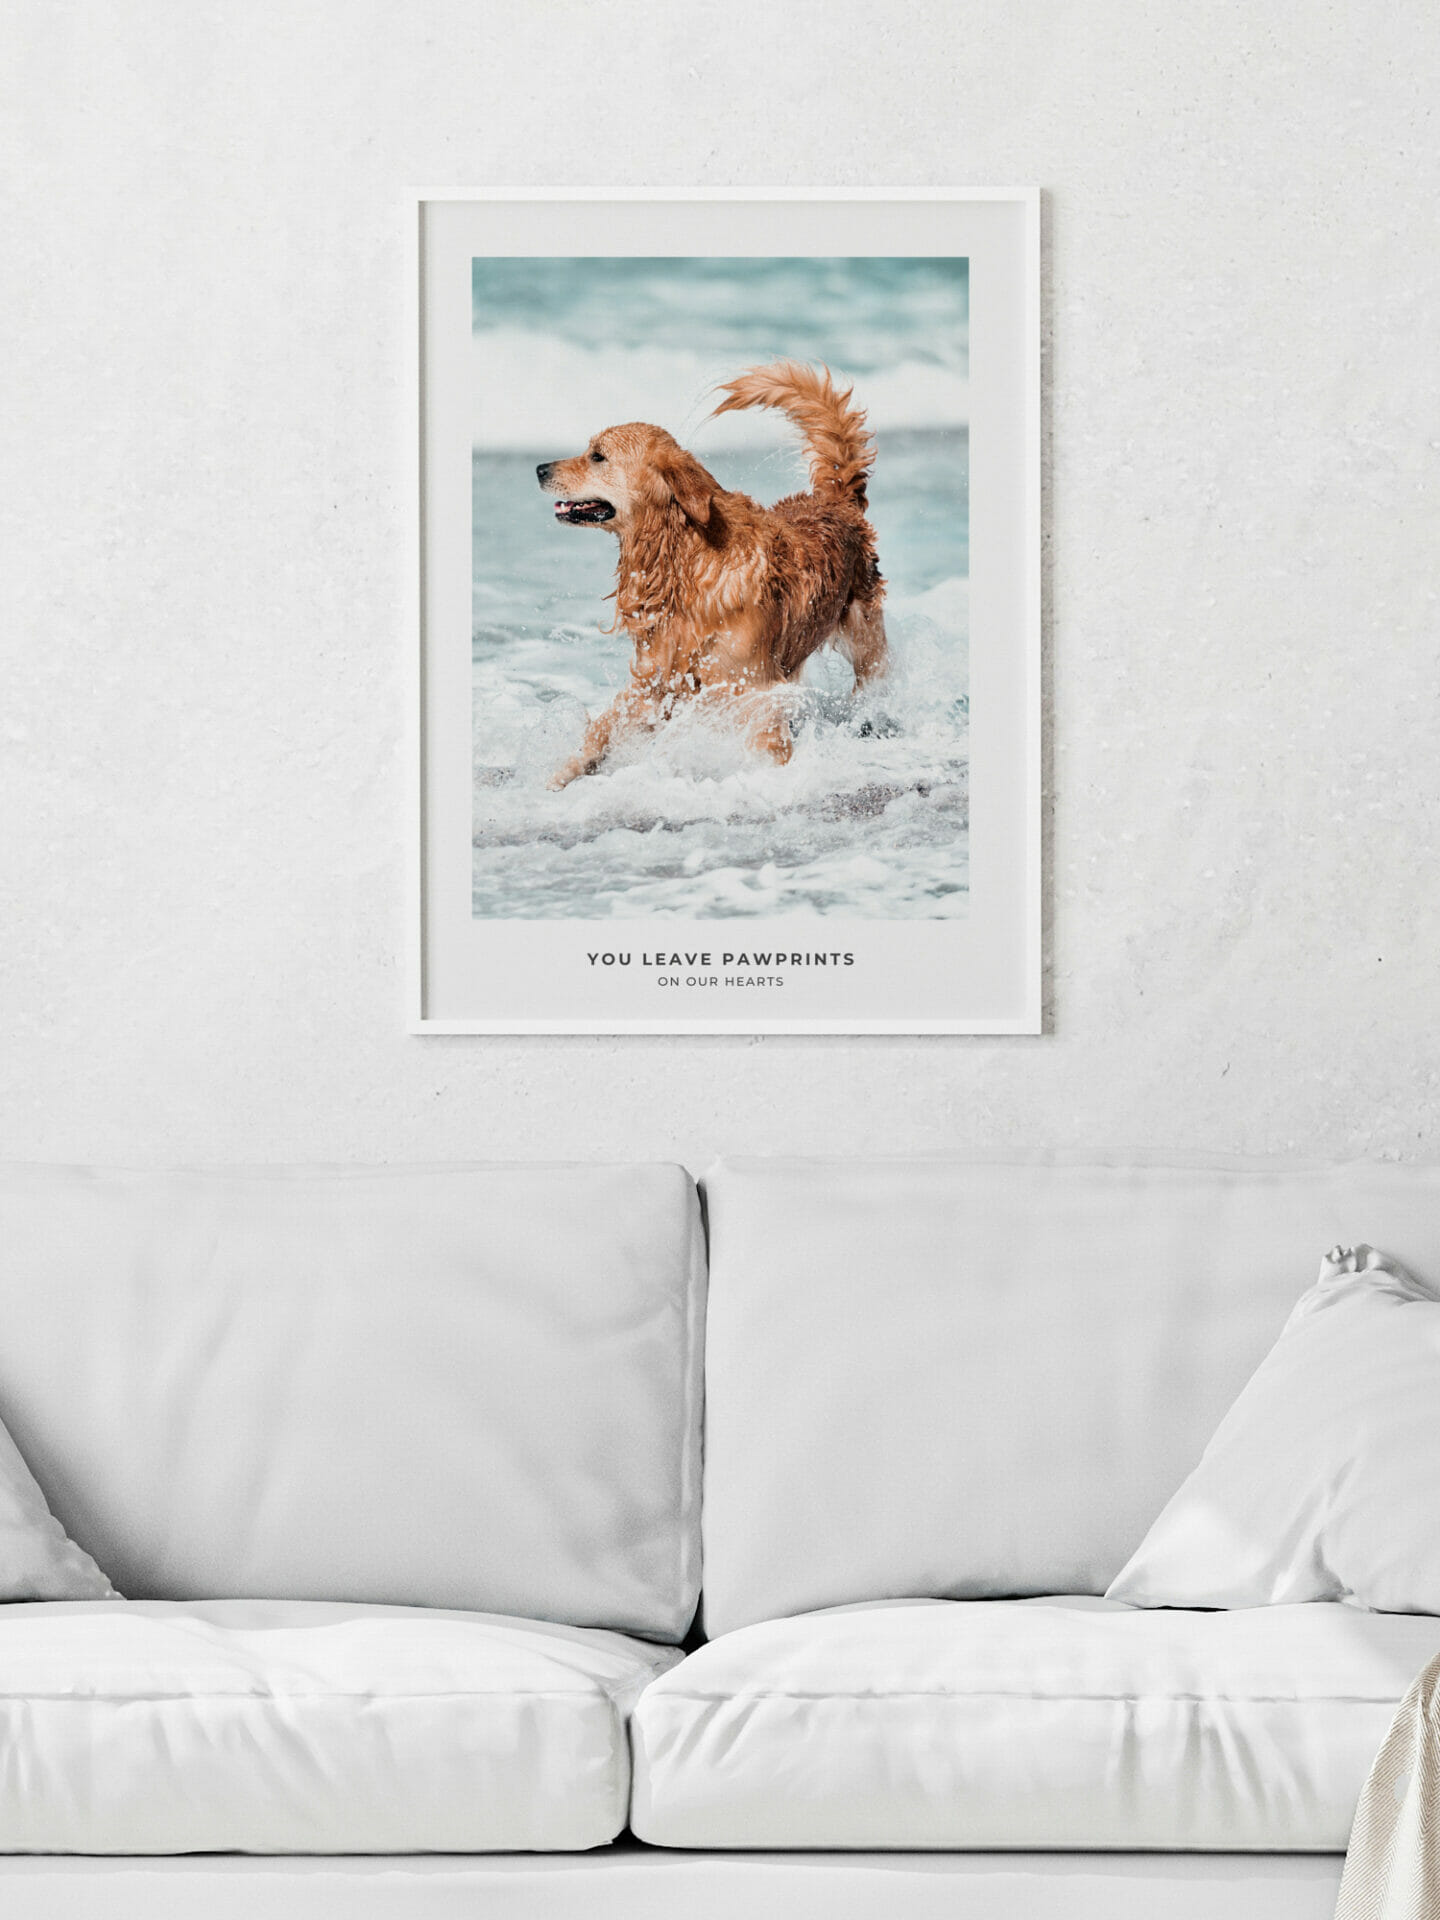 Poster of dog in ocean in interior